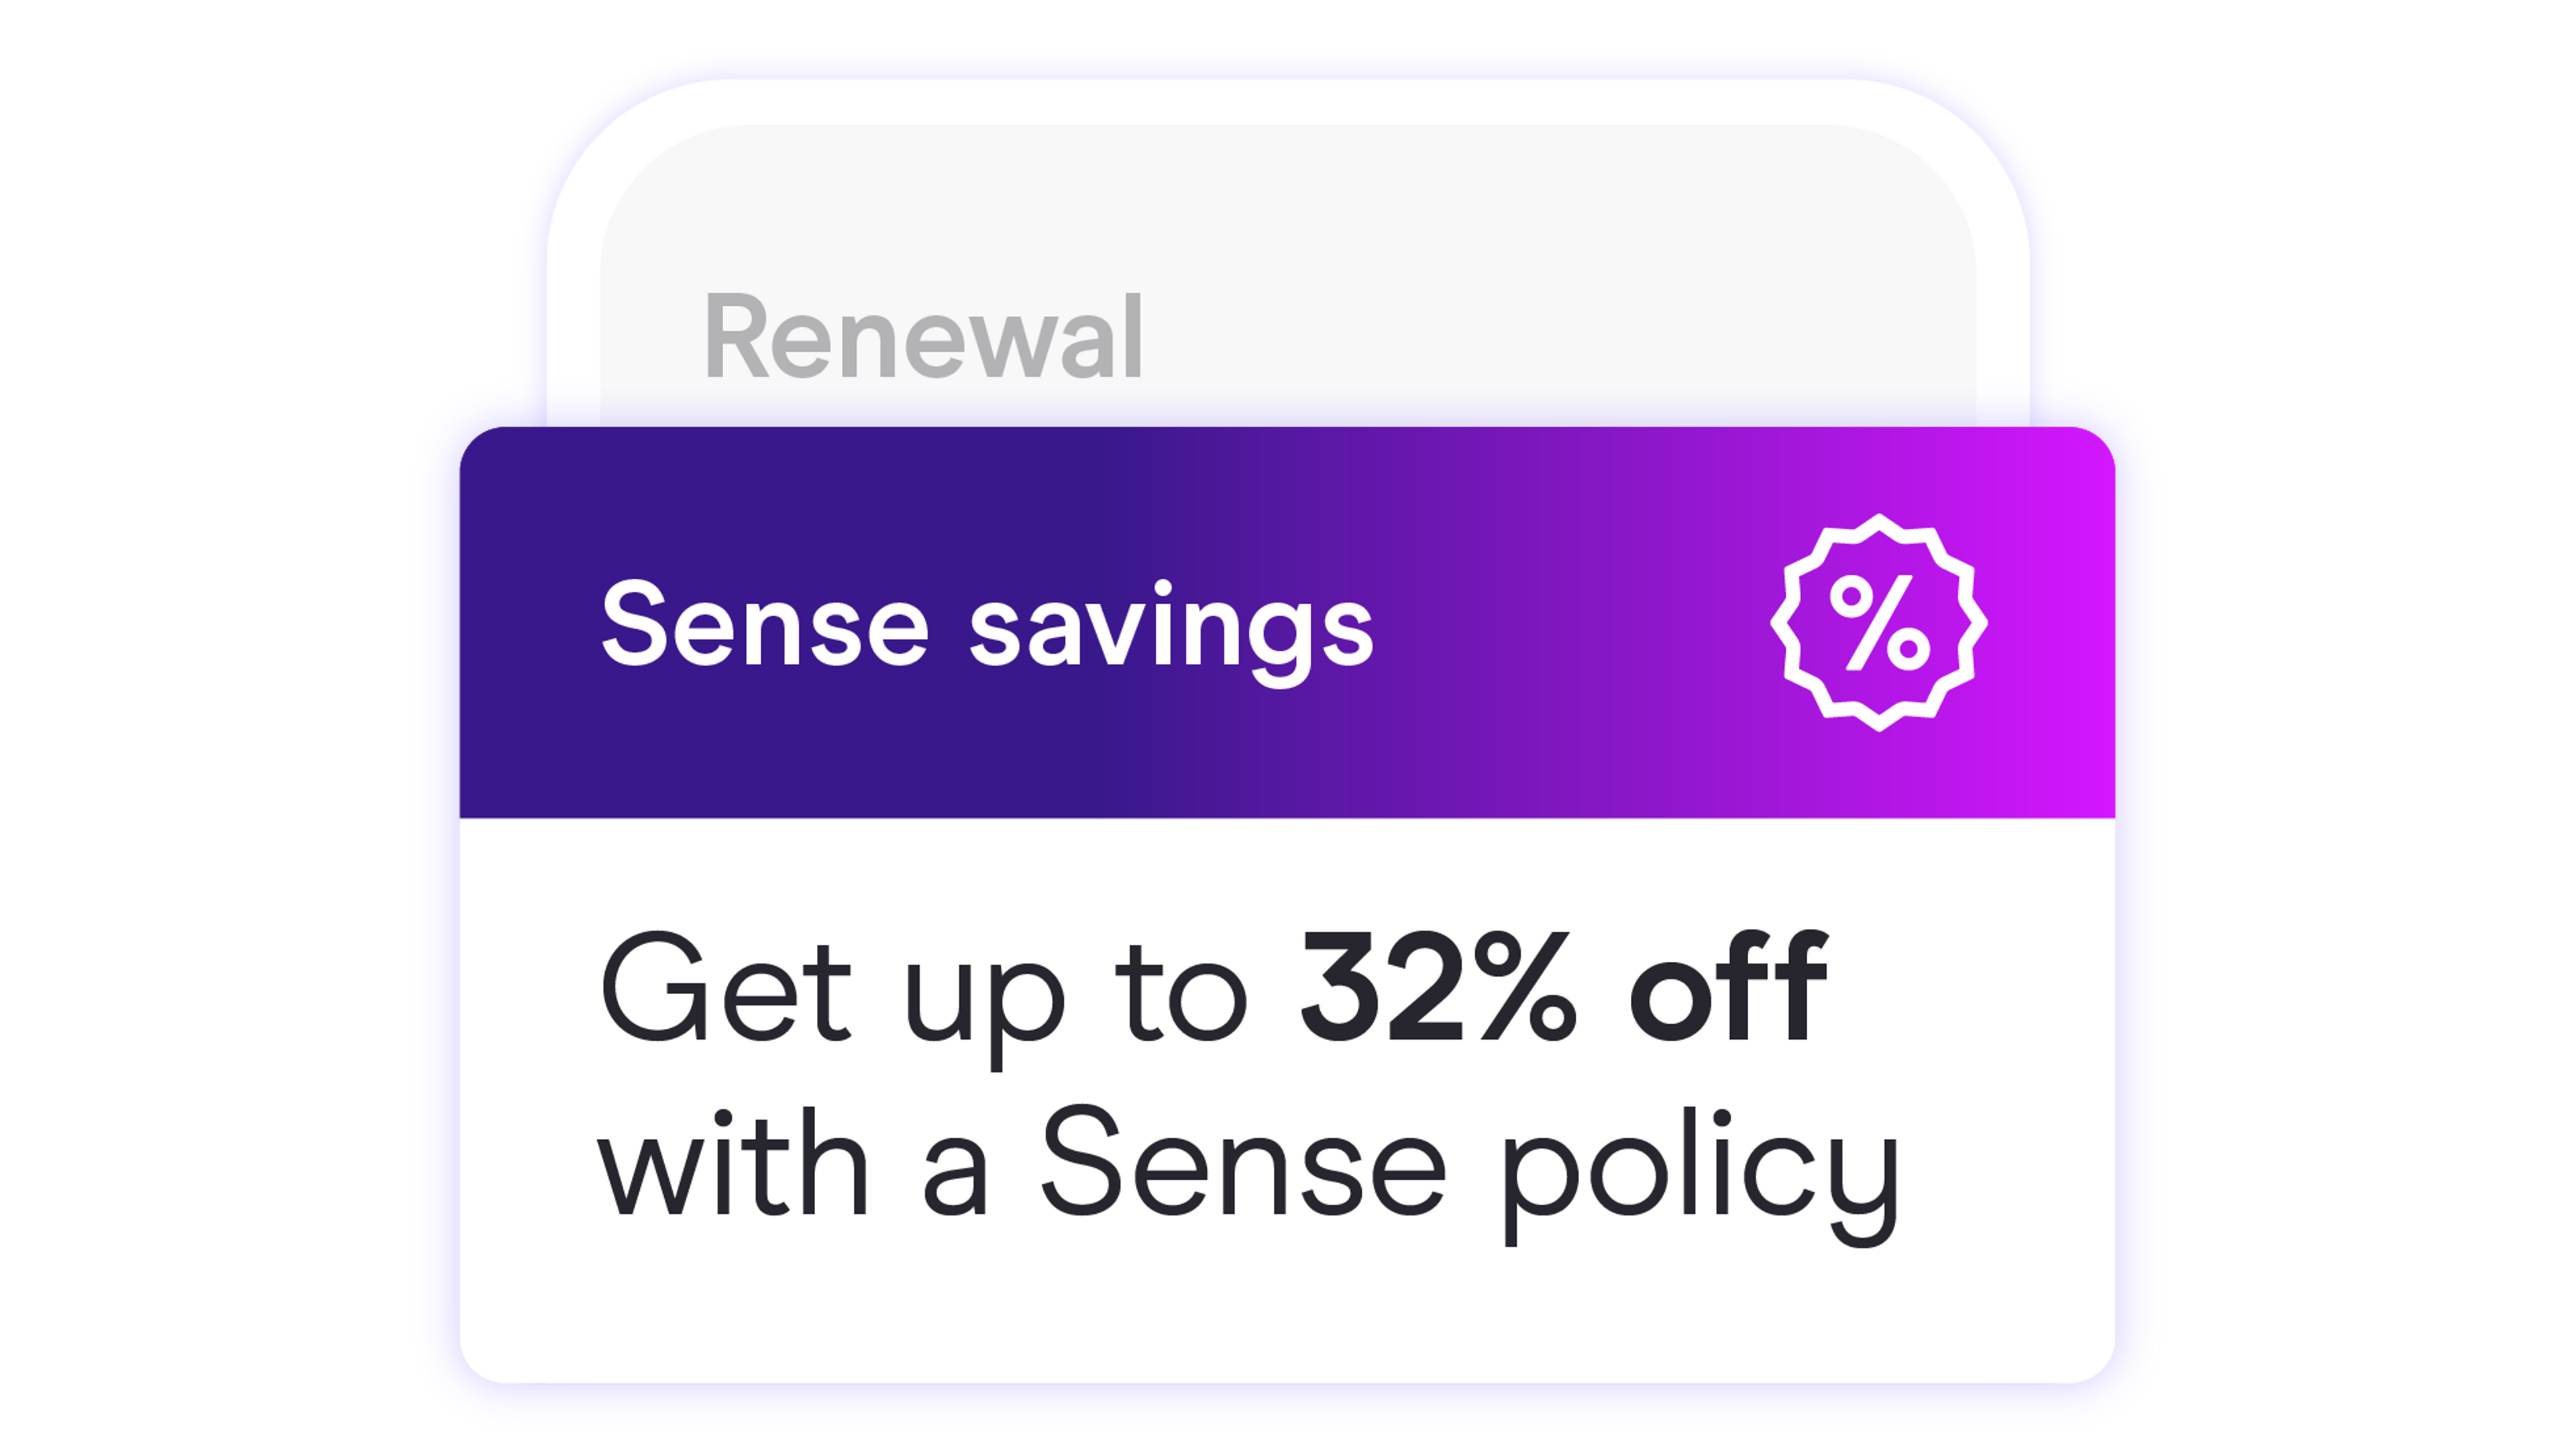 Zego Sense app renewals dashboard showing 32% discount